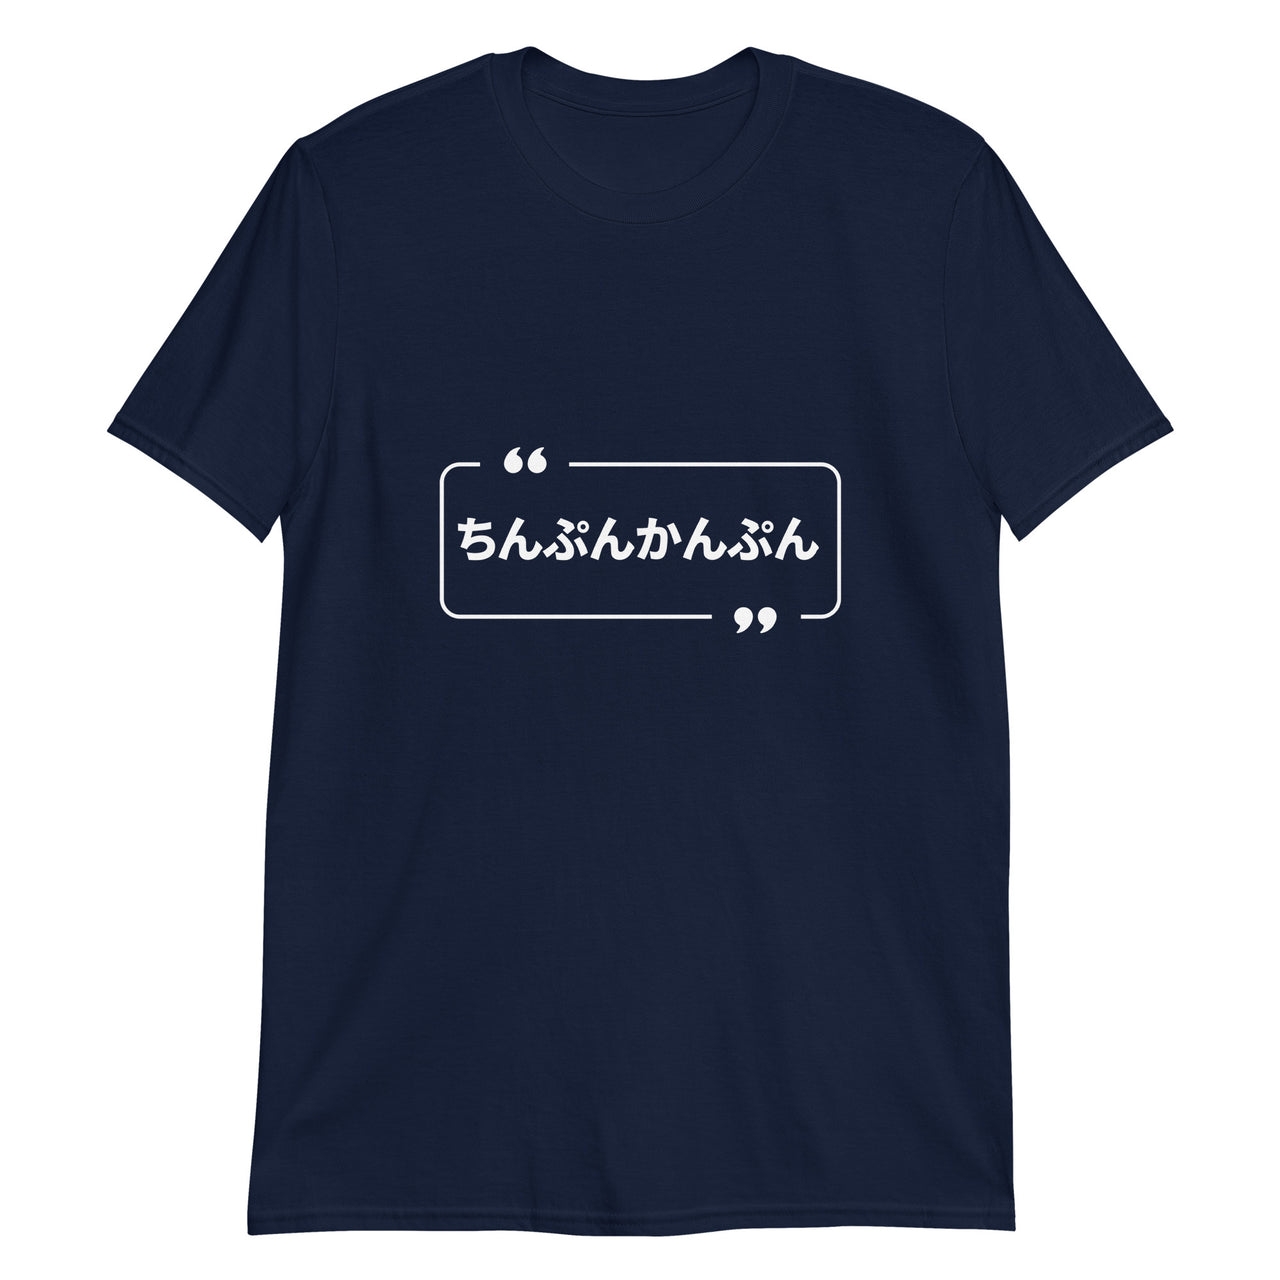 Chinpunkanpun - Gibberish and Nonsense T-Shirt